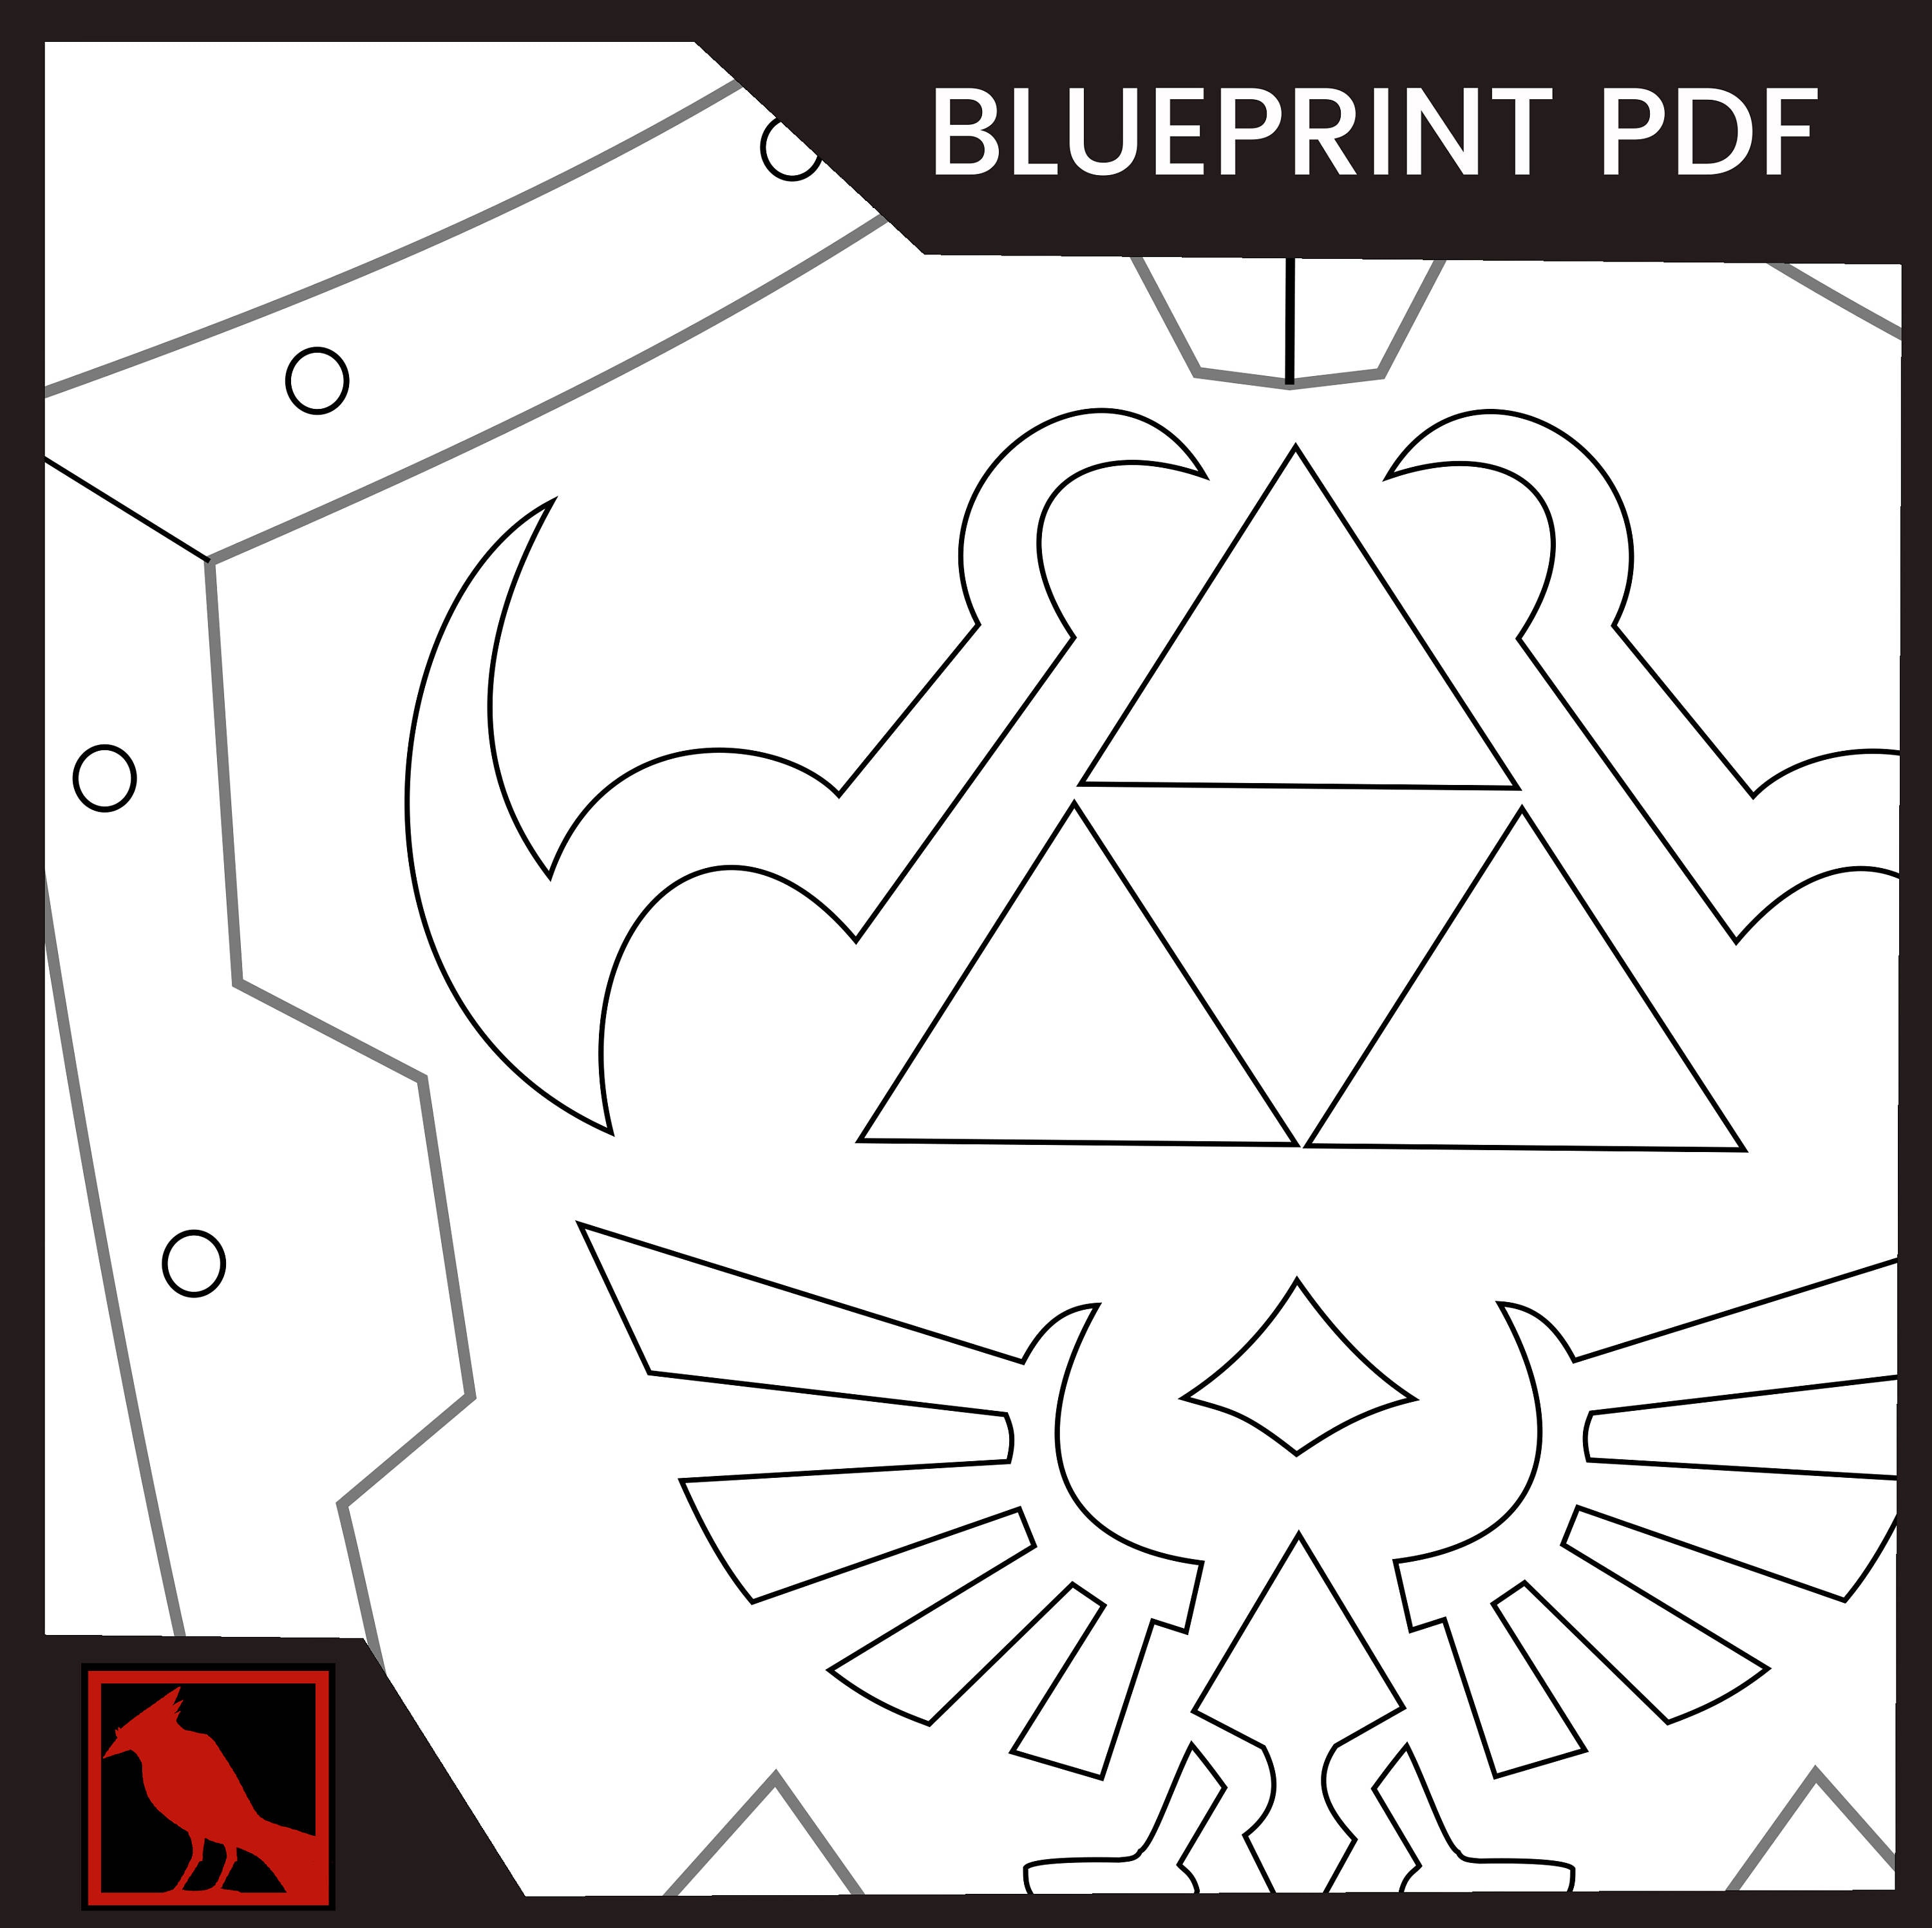 Hylian Shield Blueprint PDF